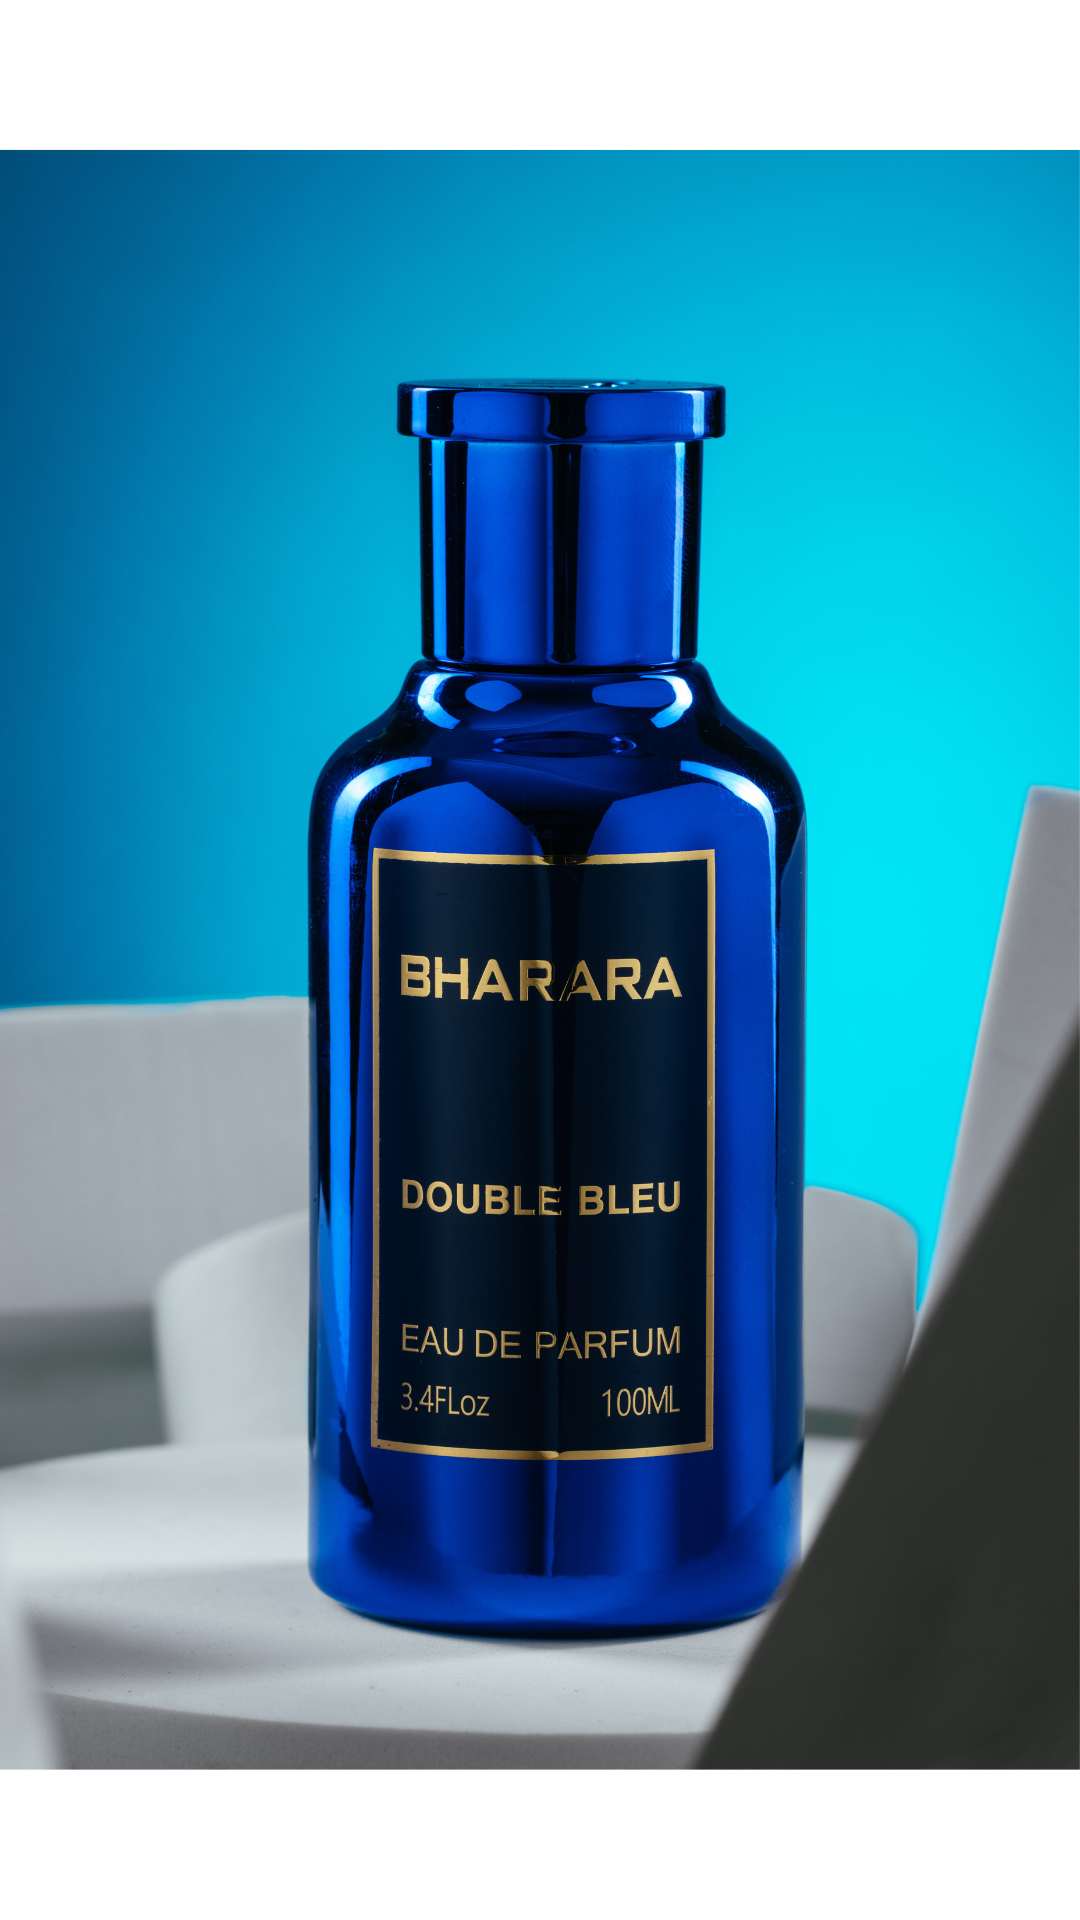 Bleu by Bharara Beauty